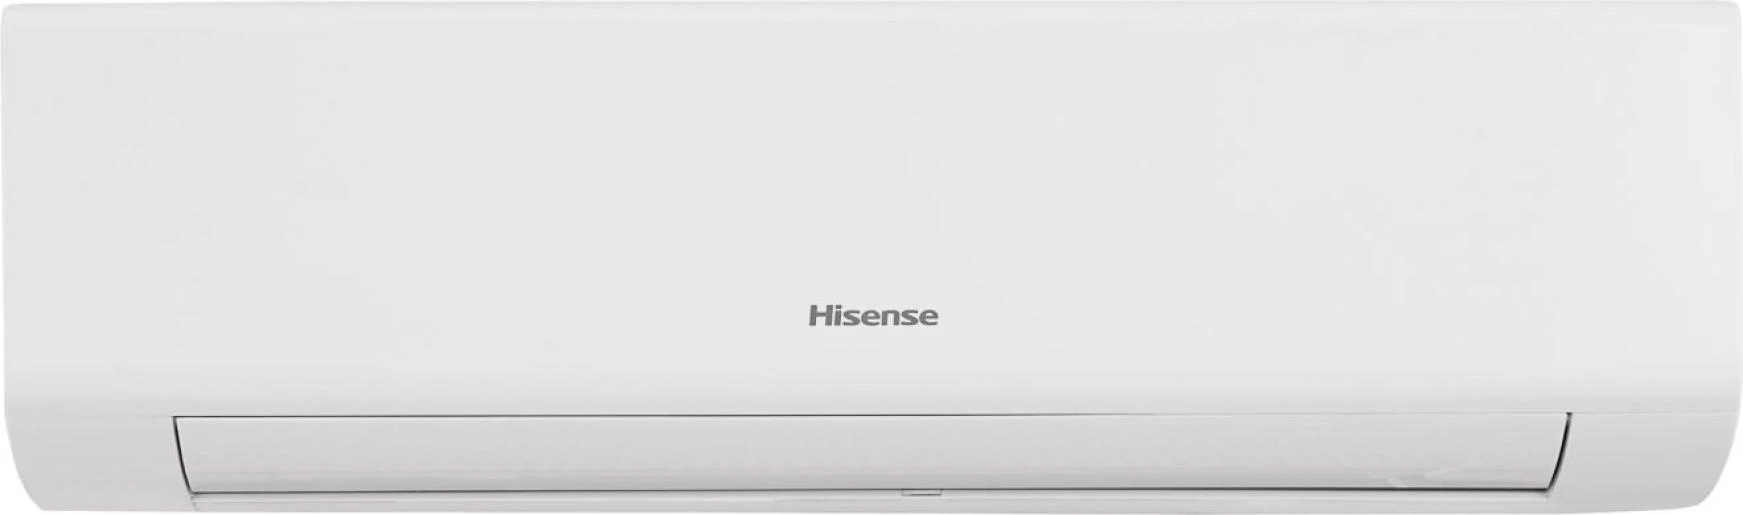 Hisense Hi Comfort WiFi 18K inverter klima uređaj 18000 btu